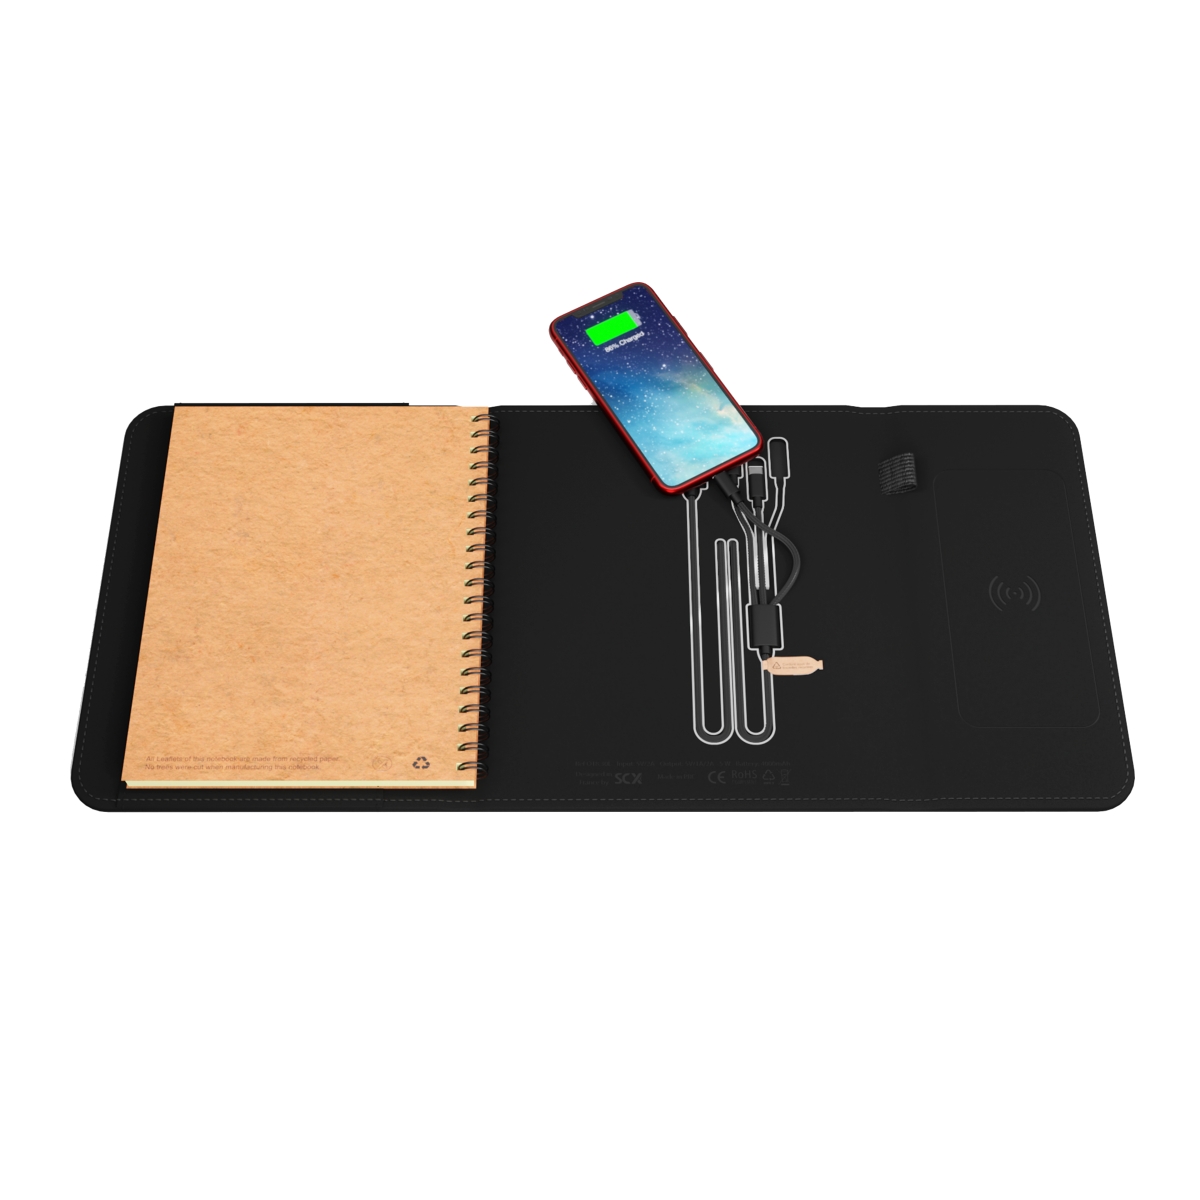 O18 - Wireless power notebook